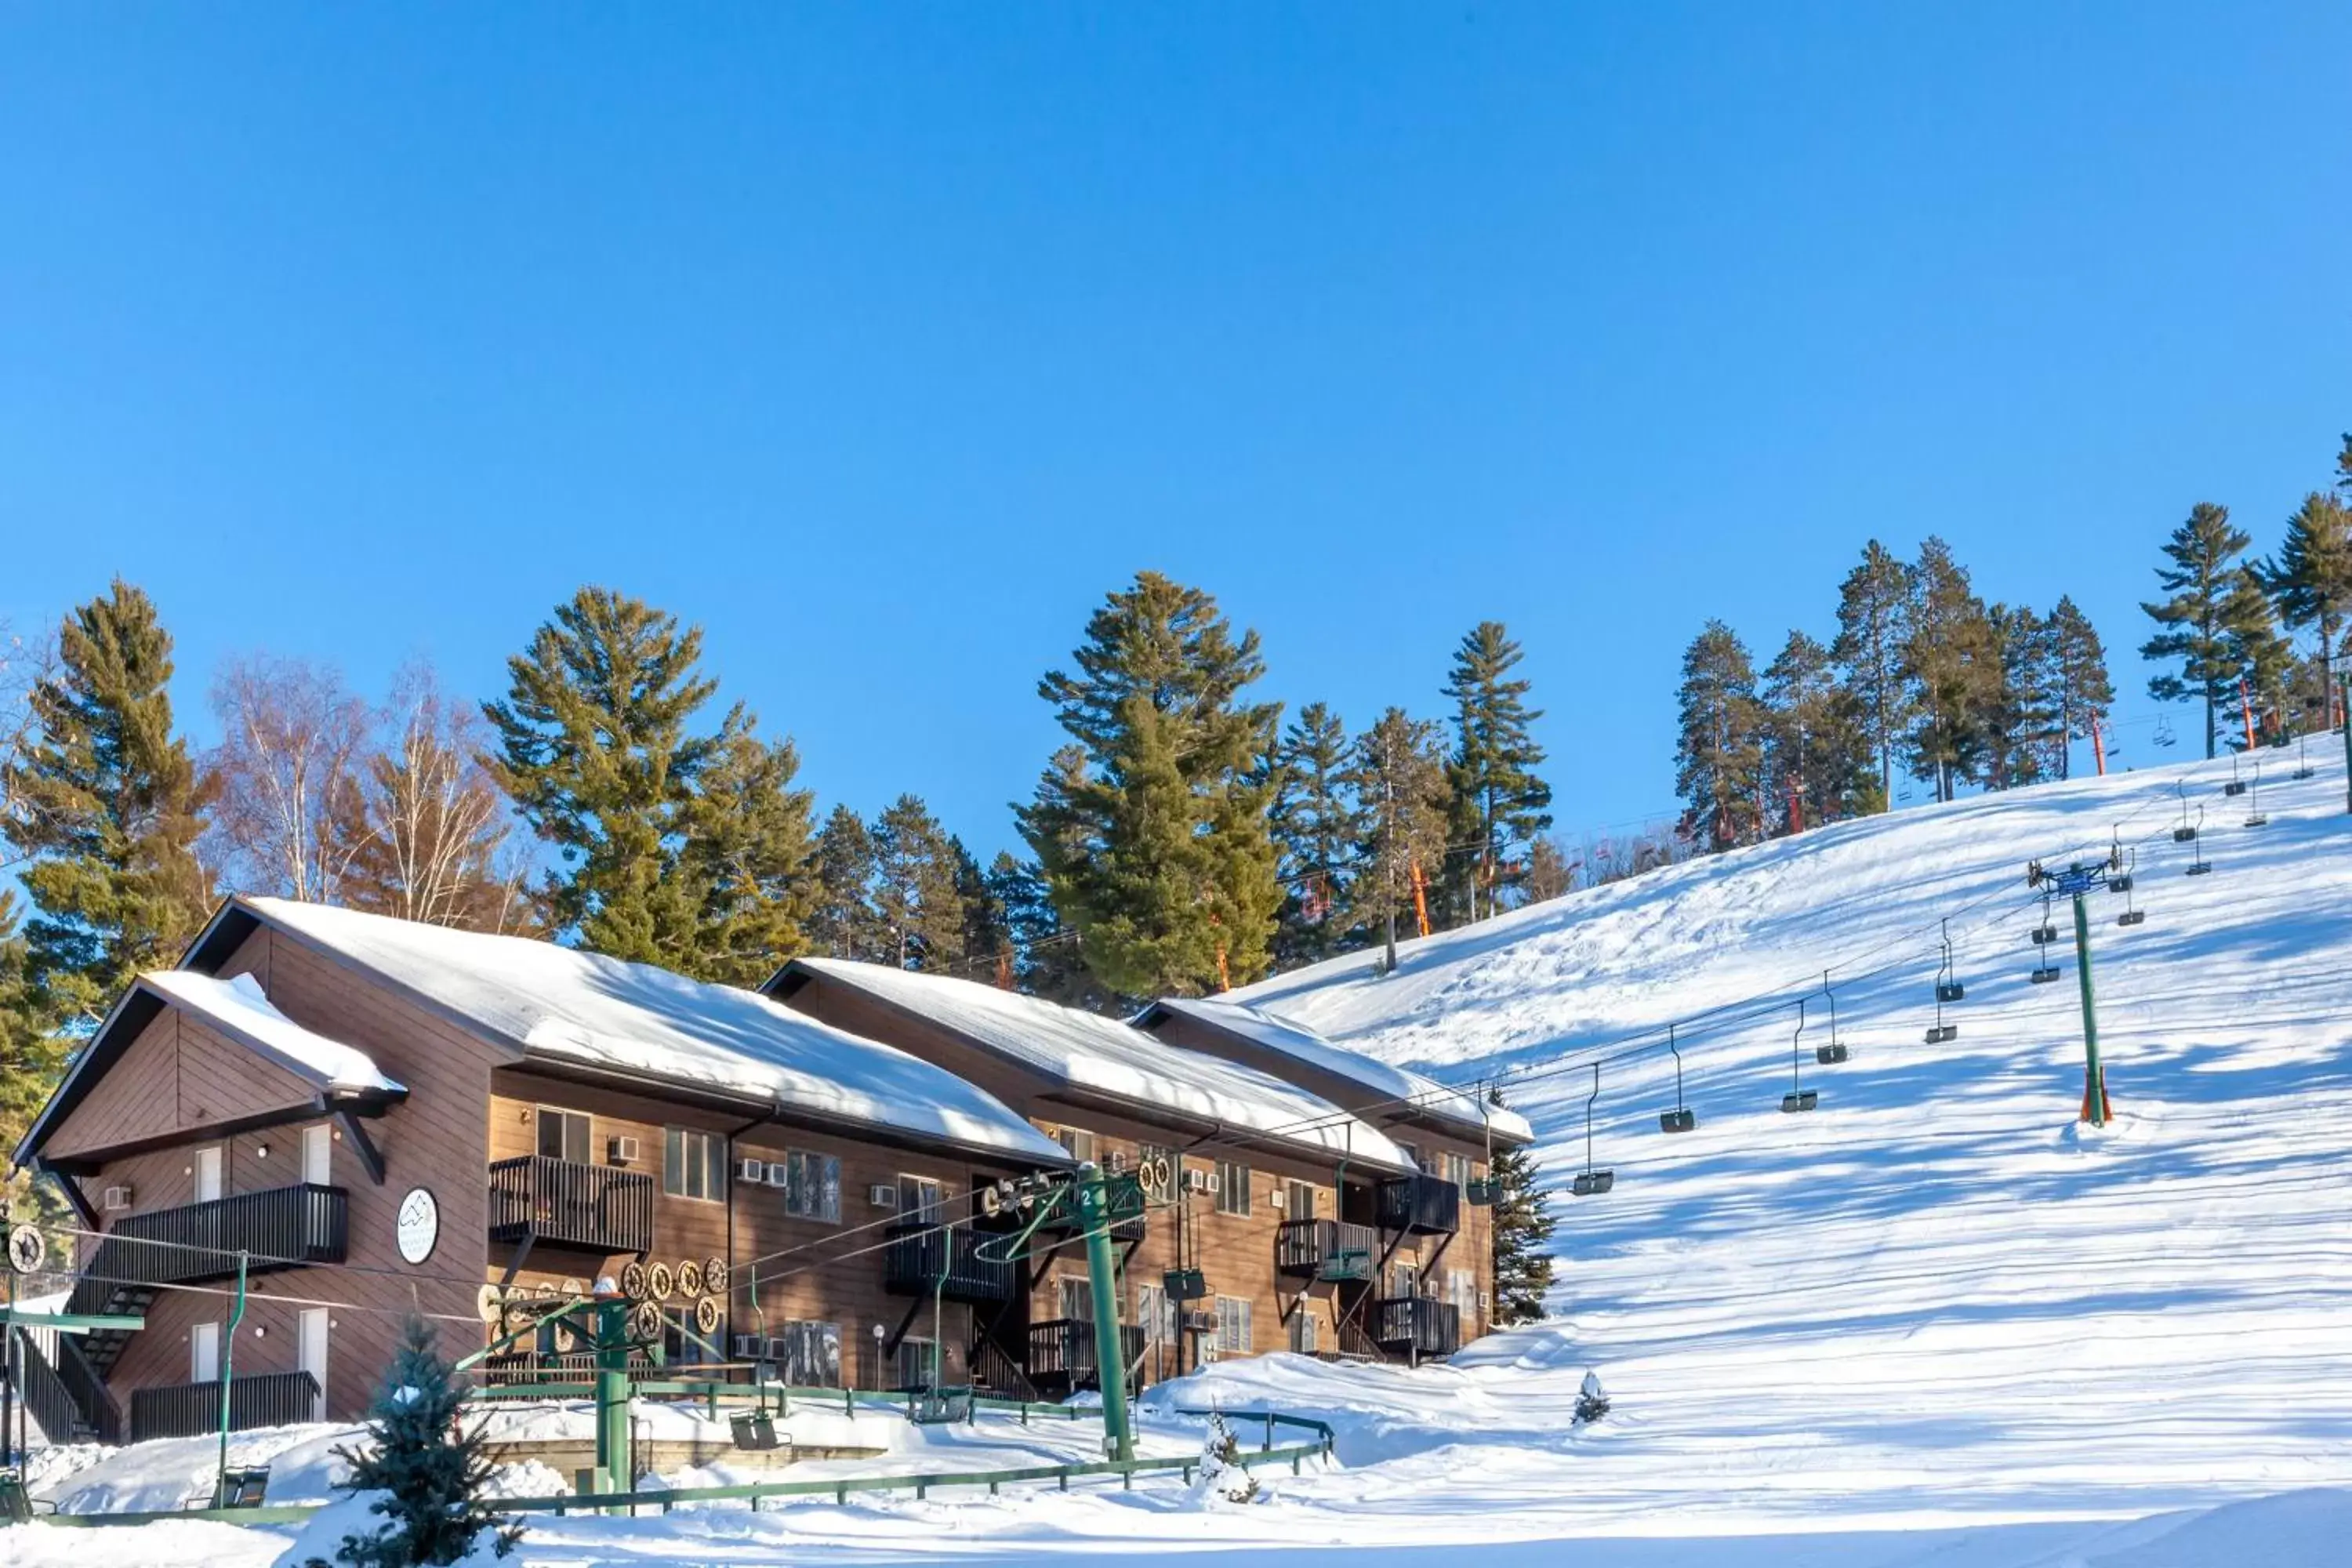 Property building, Winter in Pine Mountain Resort